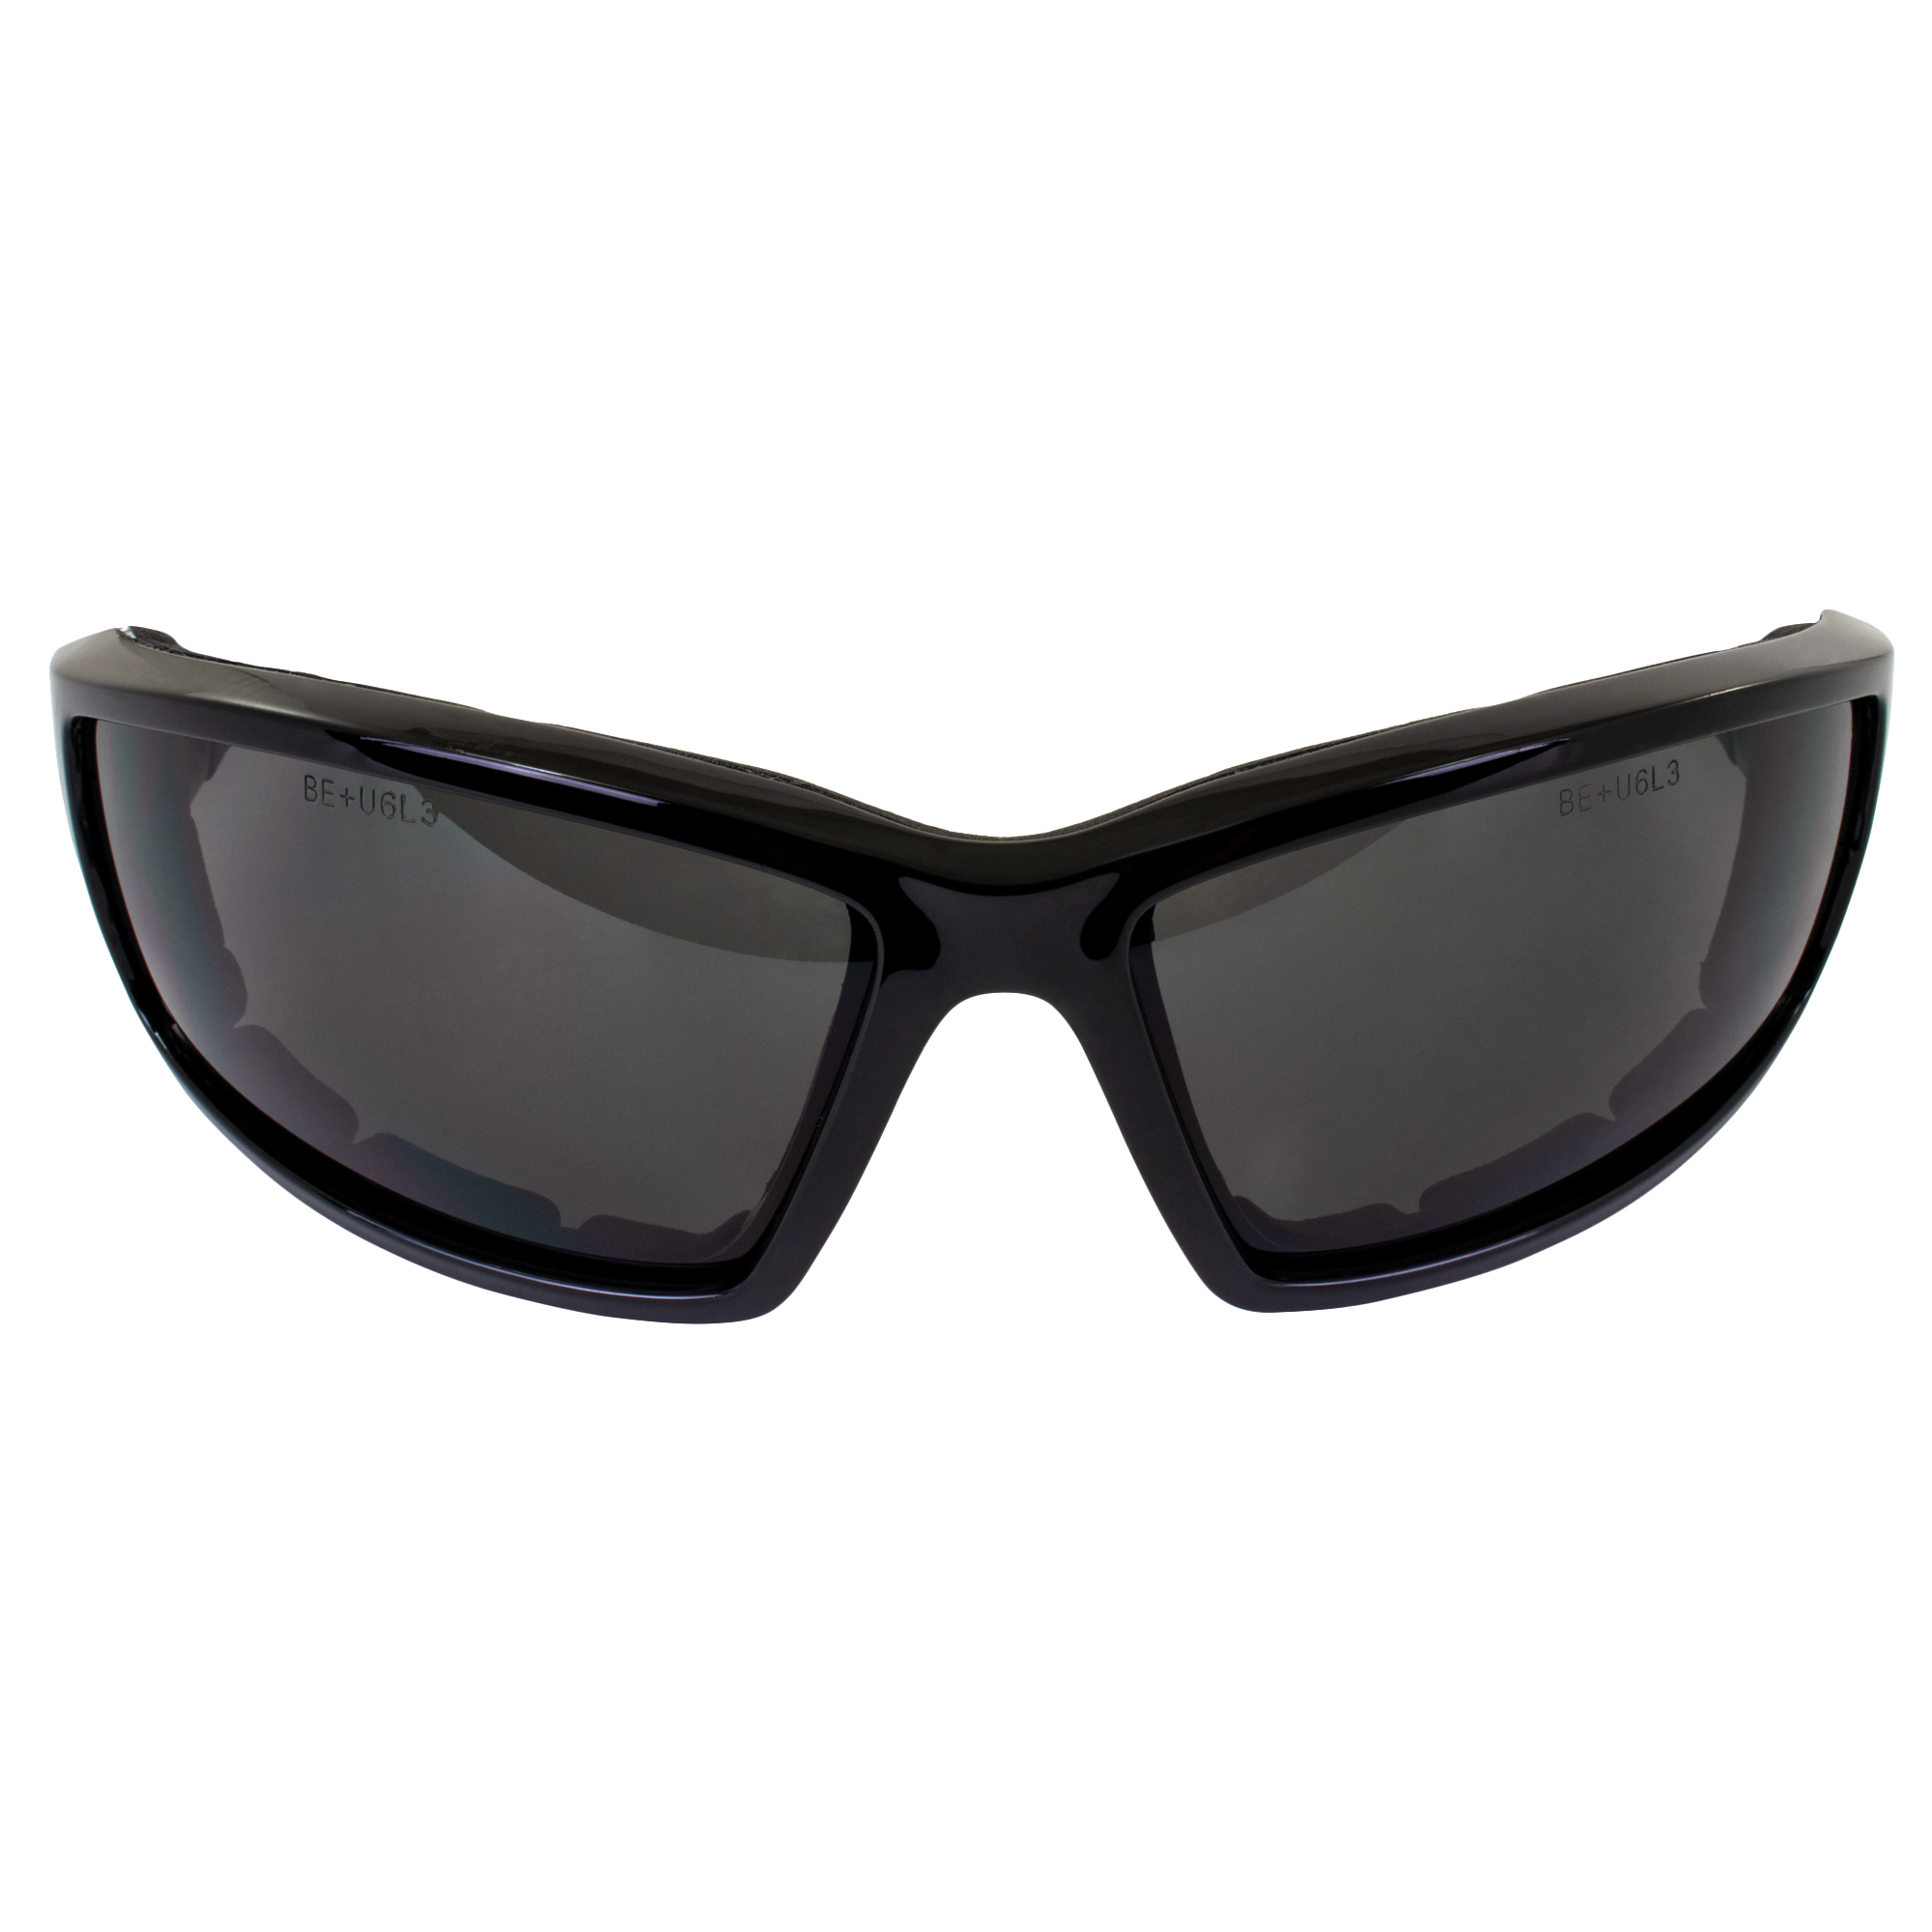 Birdz Eyewear Swoop Anti-Fog Padded Motorcycle Riding Sunglasses Black Frame Lenses for Day & Night ANSI Z87 .1 - image 5 of 7